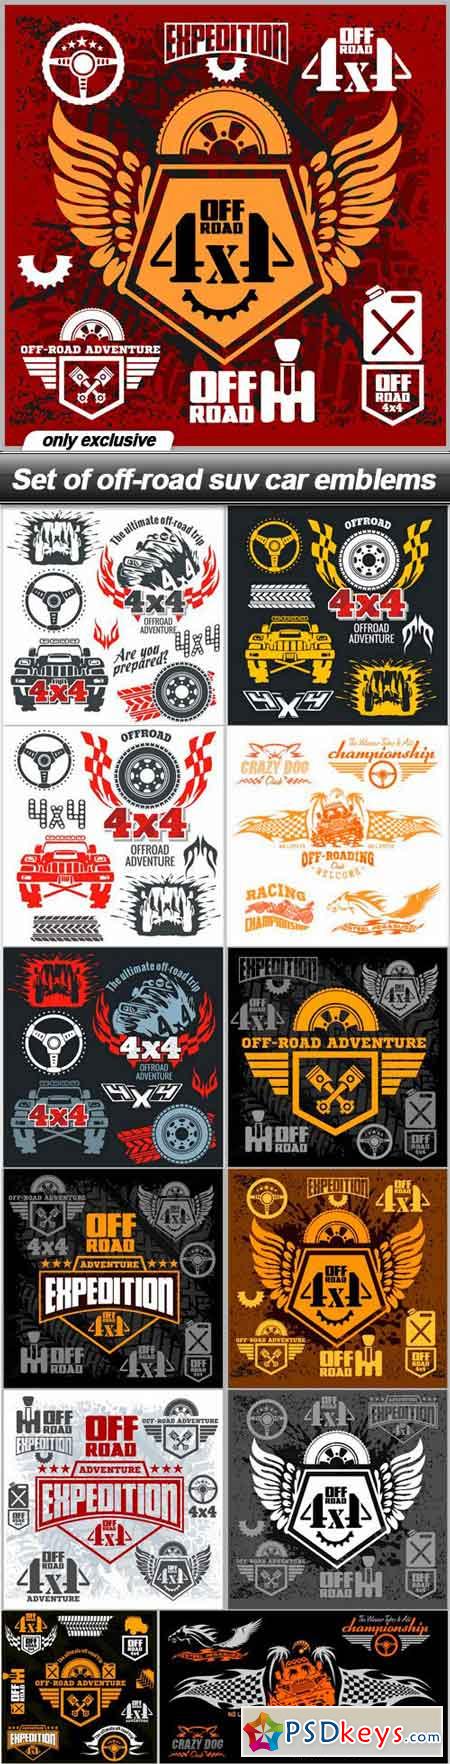 Set of off-road suv car emblems - 13 EPS